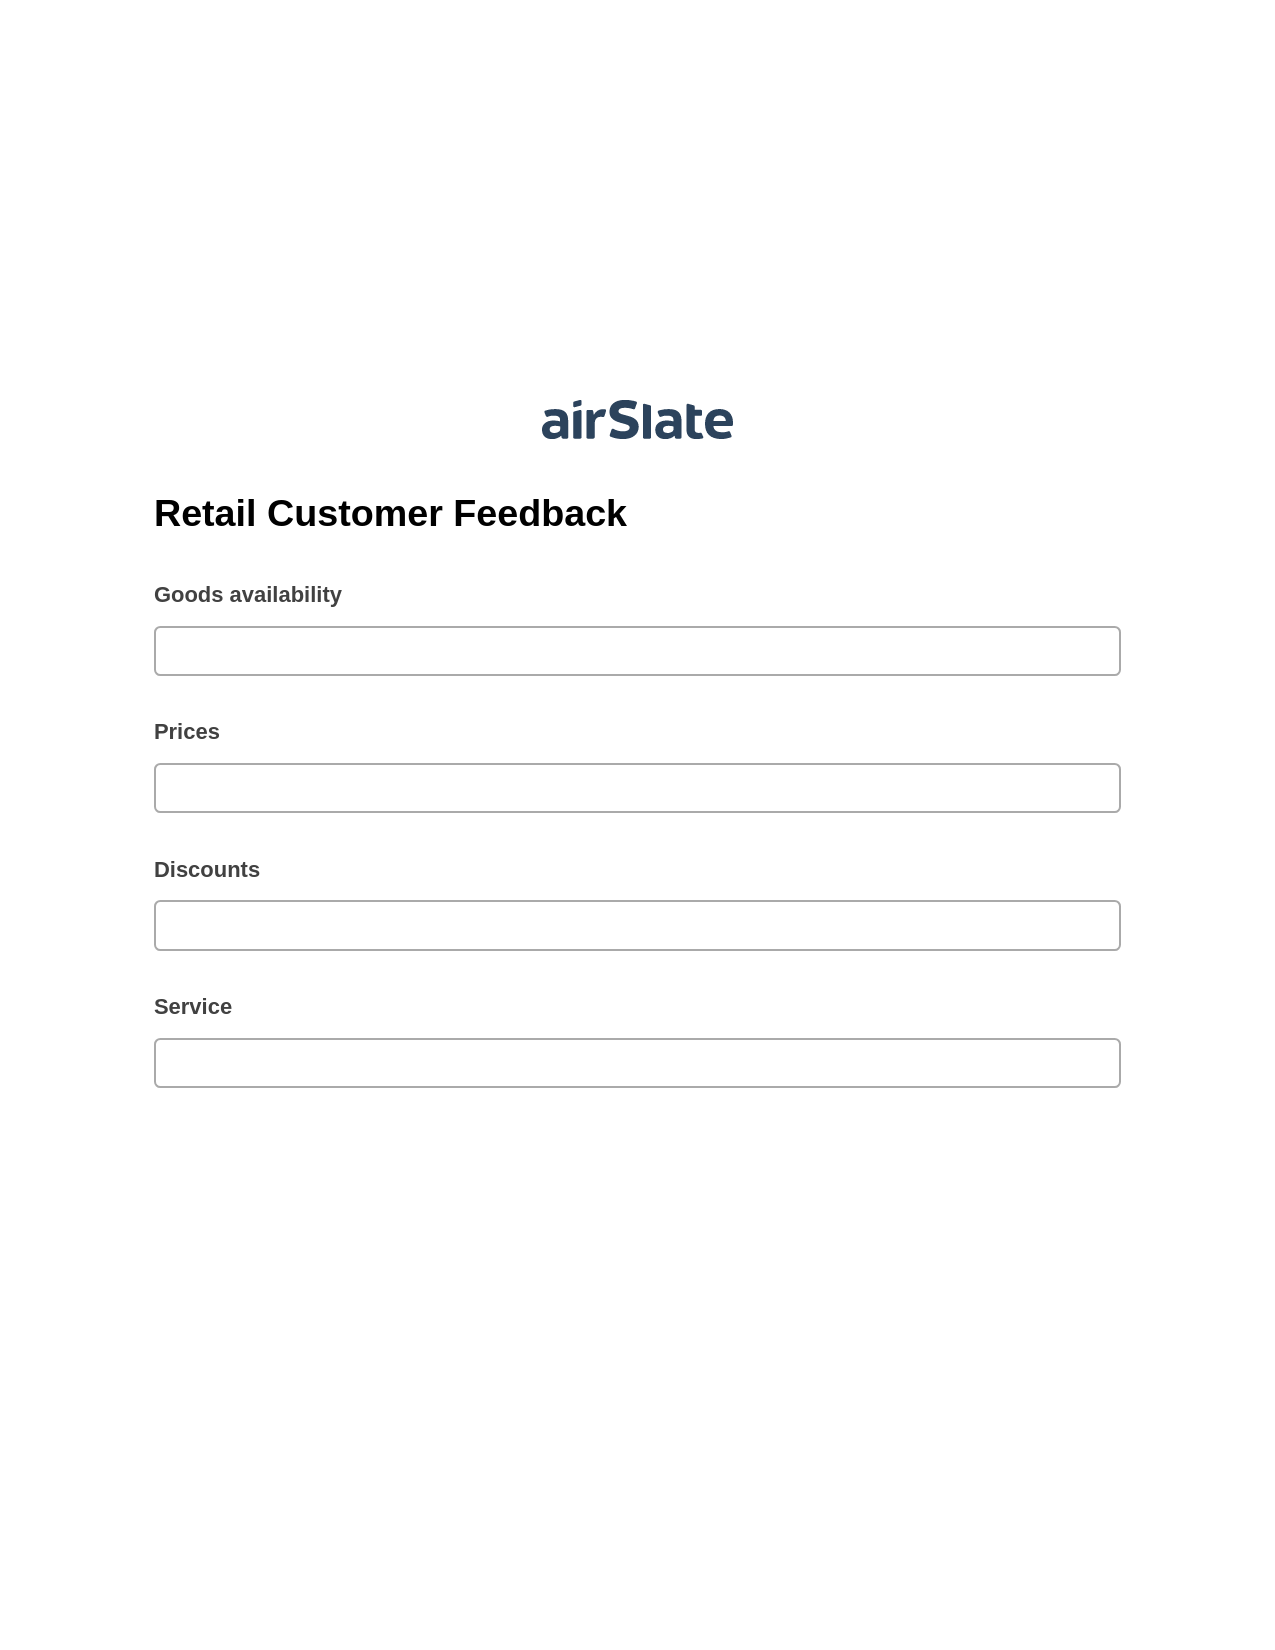 Retail Customer Feedback Pre-fill Document Bot, Email Notification Bot, Box Bot